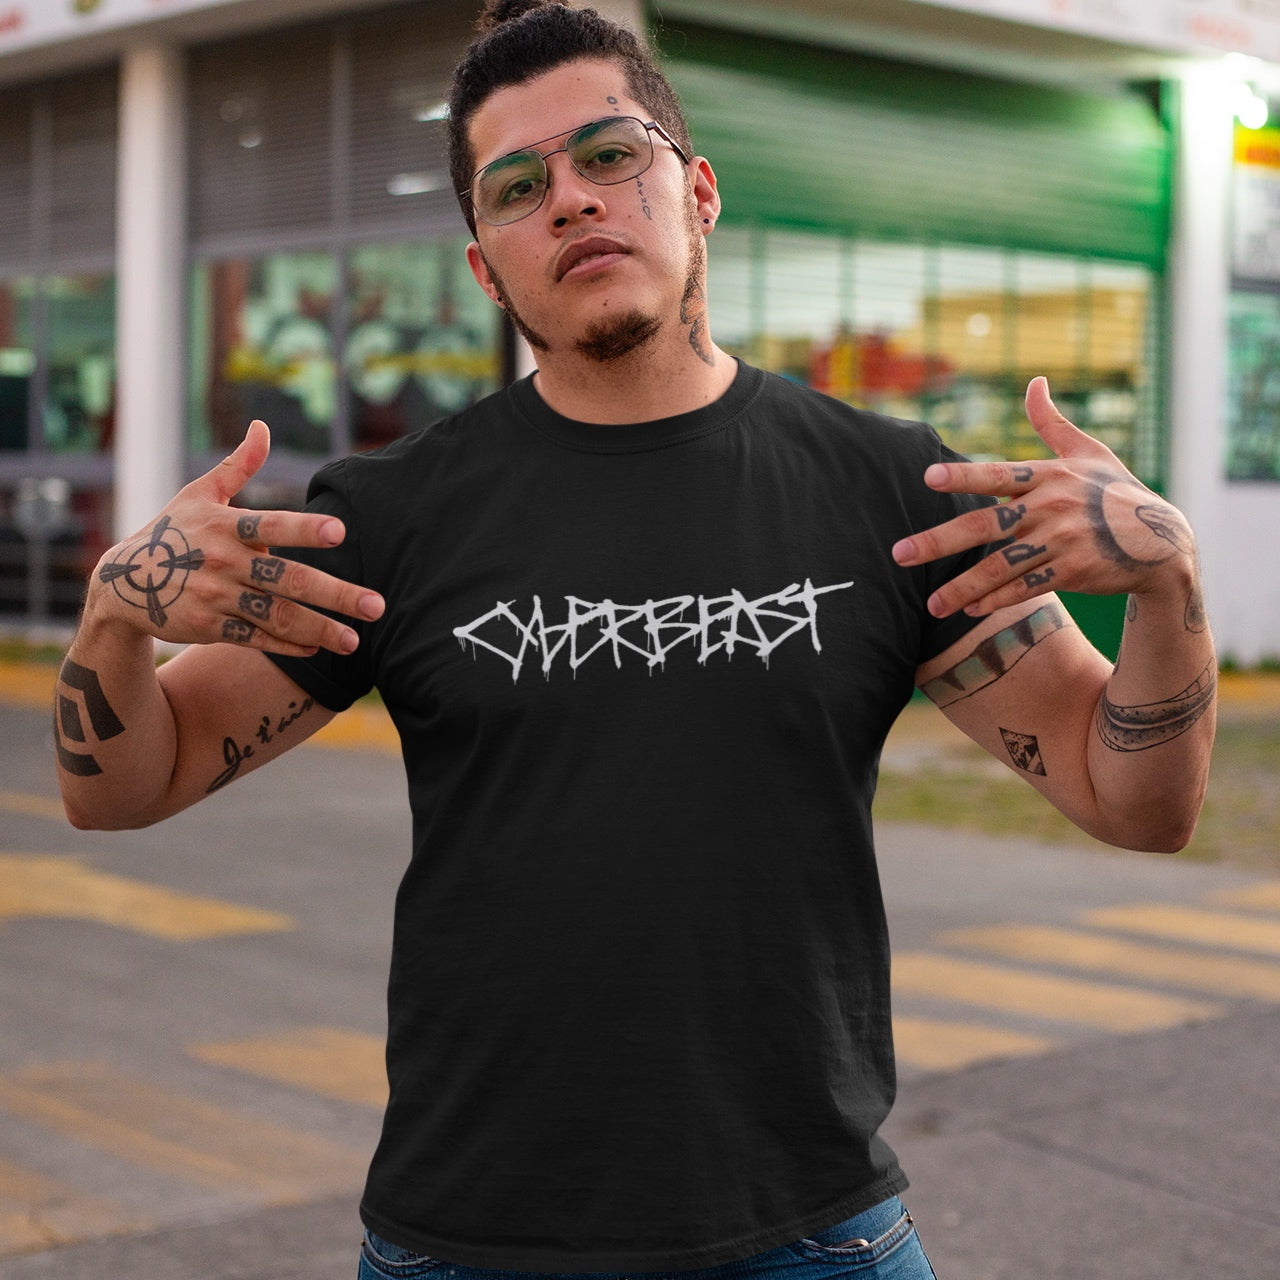 CyberBeast Graffiti T-Shirt